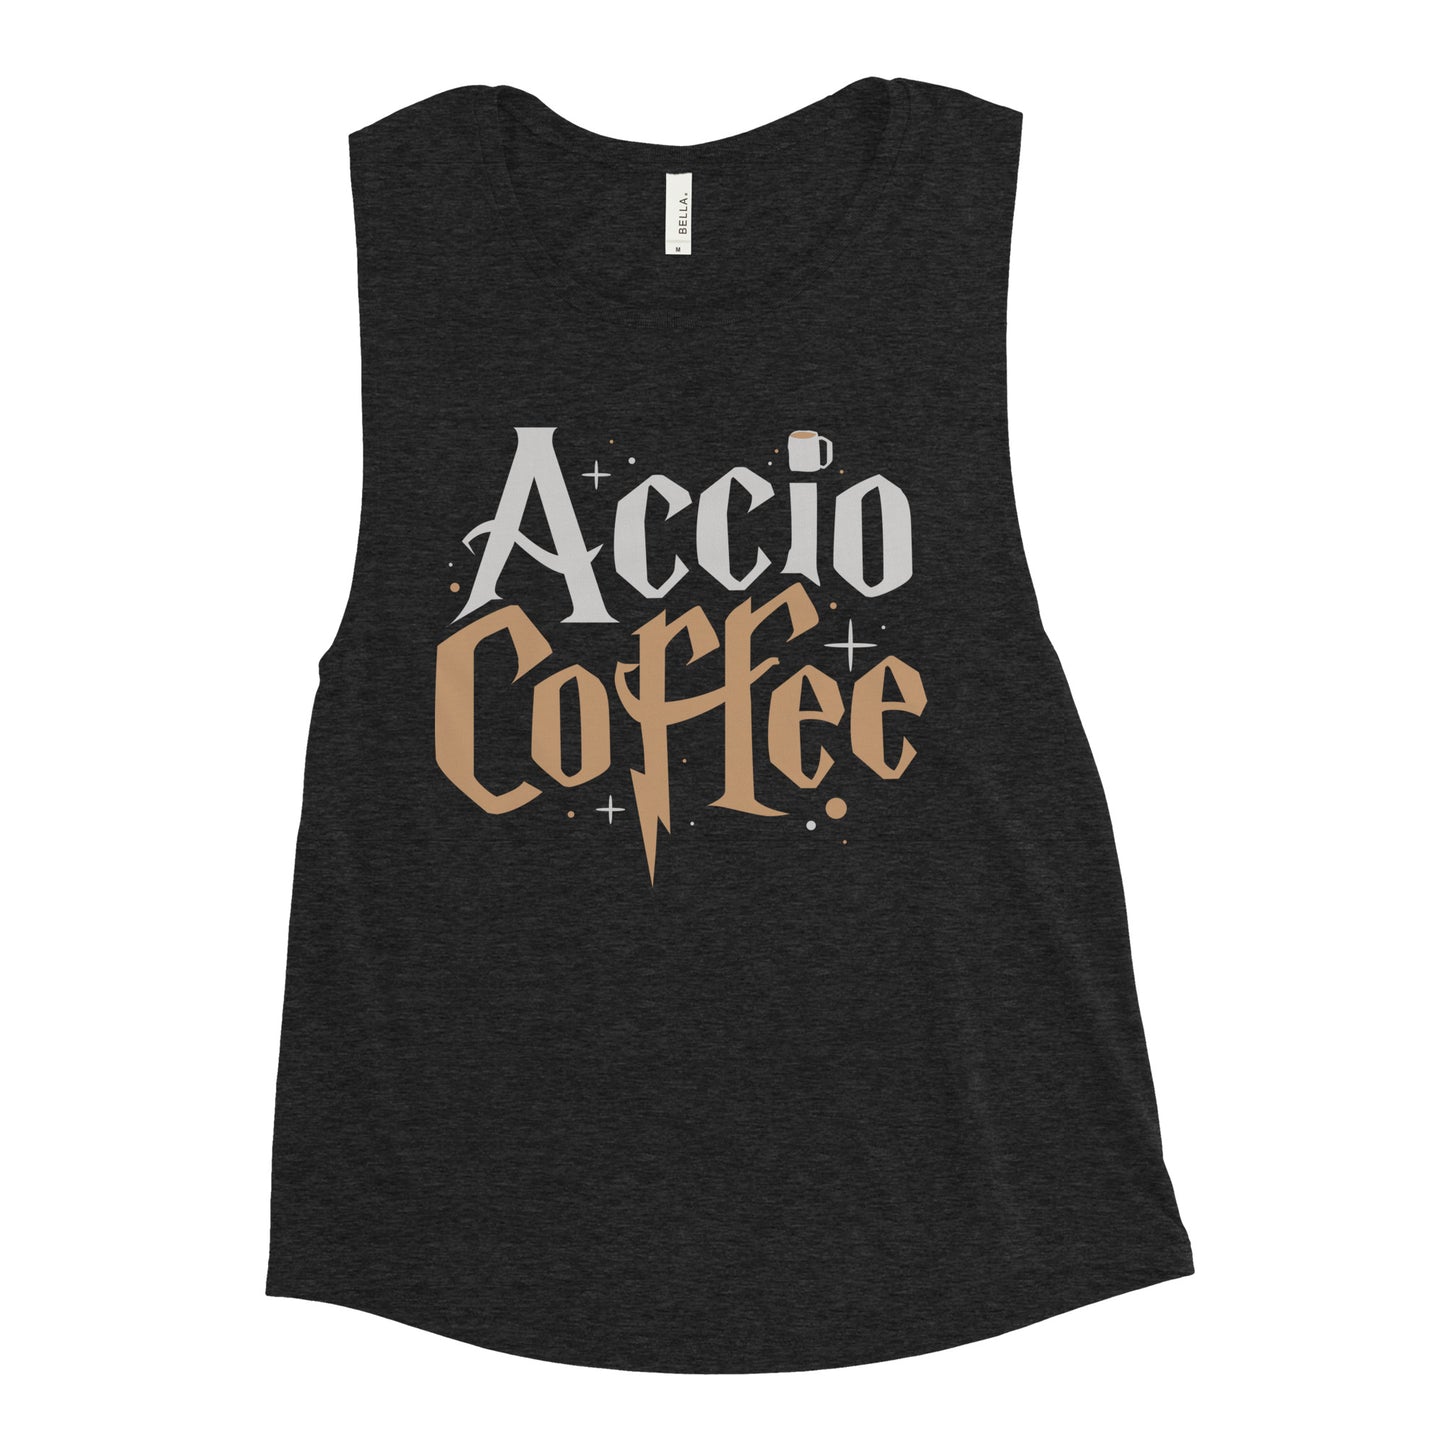 Accio Coffee Women's Muscle Tank